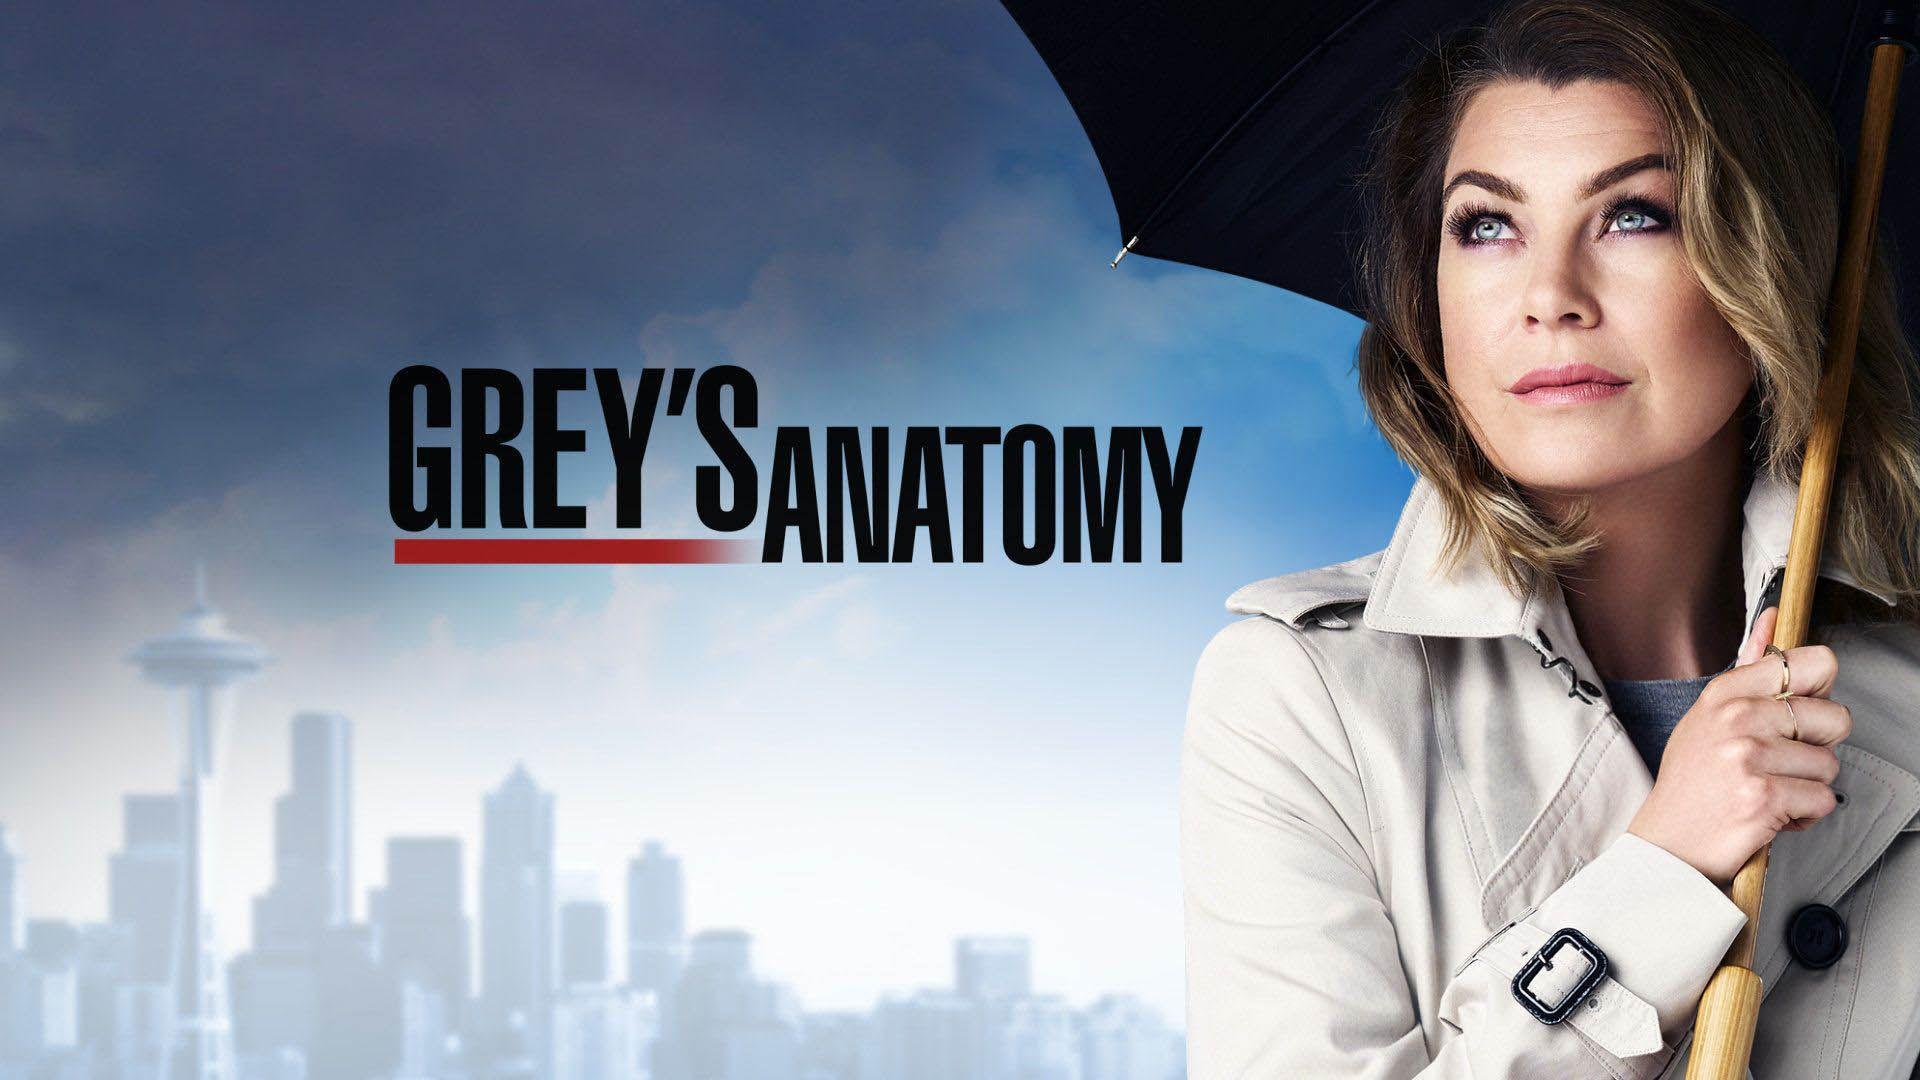 Grey's Anatomy Season 12 Poster HD 16 9